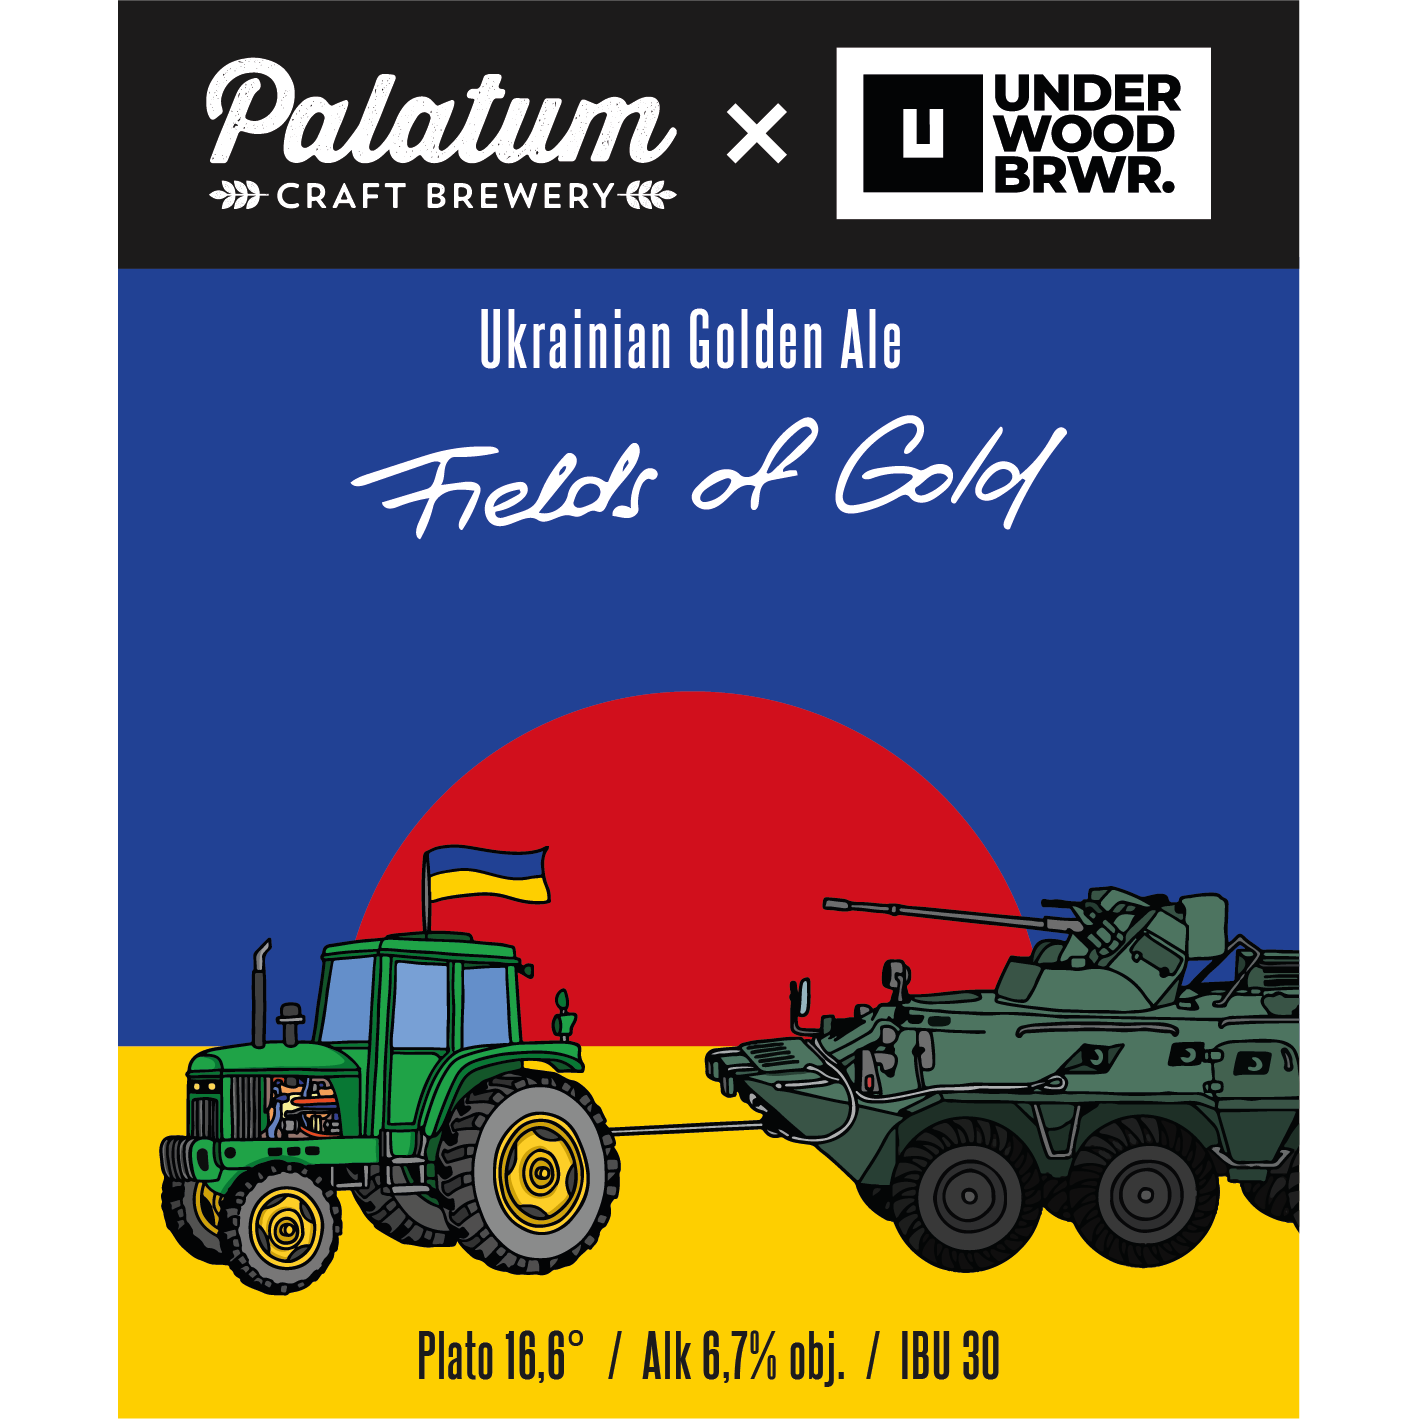 PALATUM FILEDS OF GOLD – Ukrainian Golden Ale